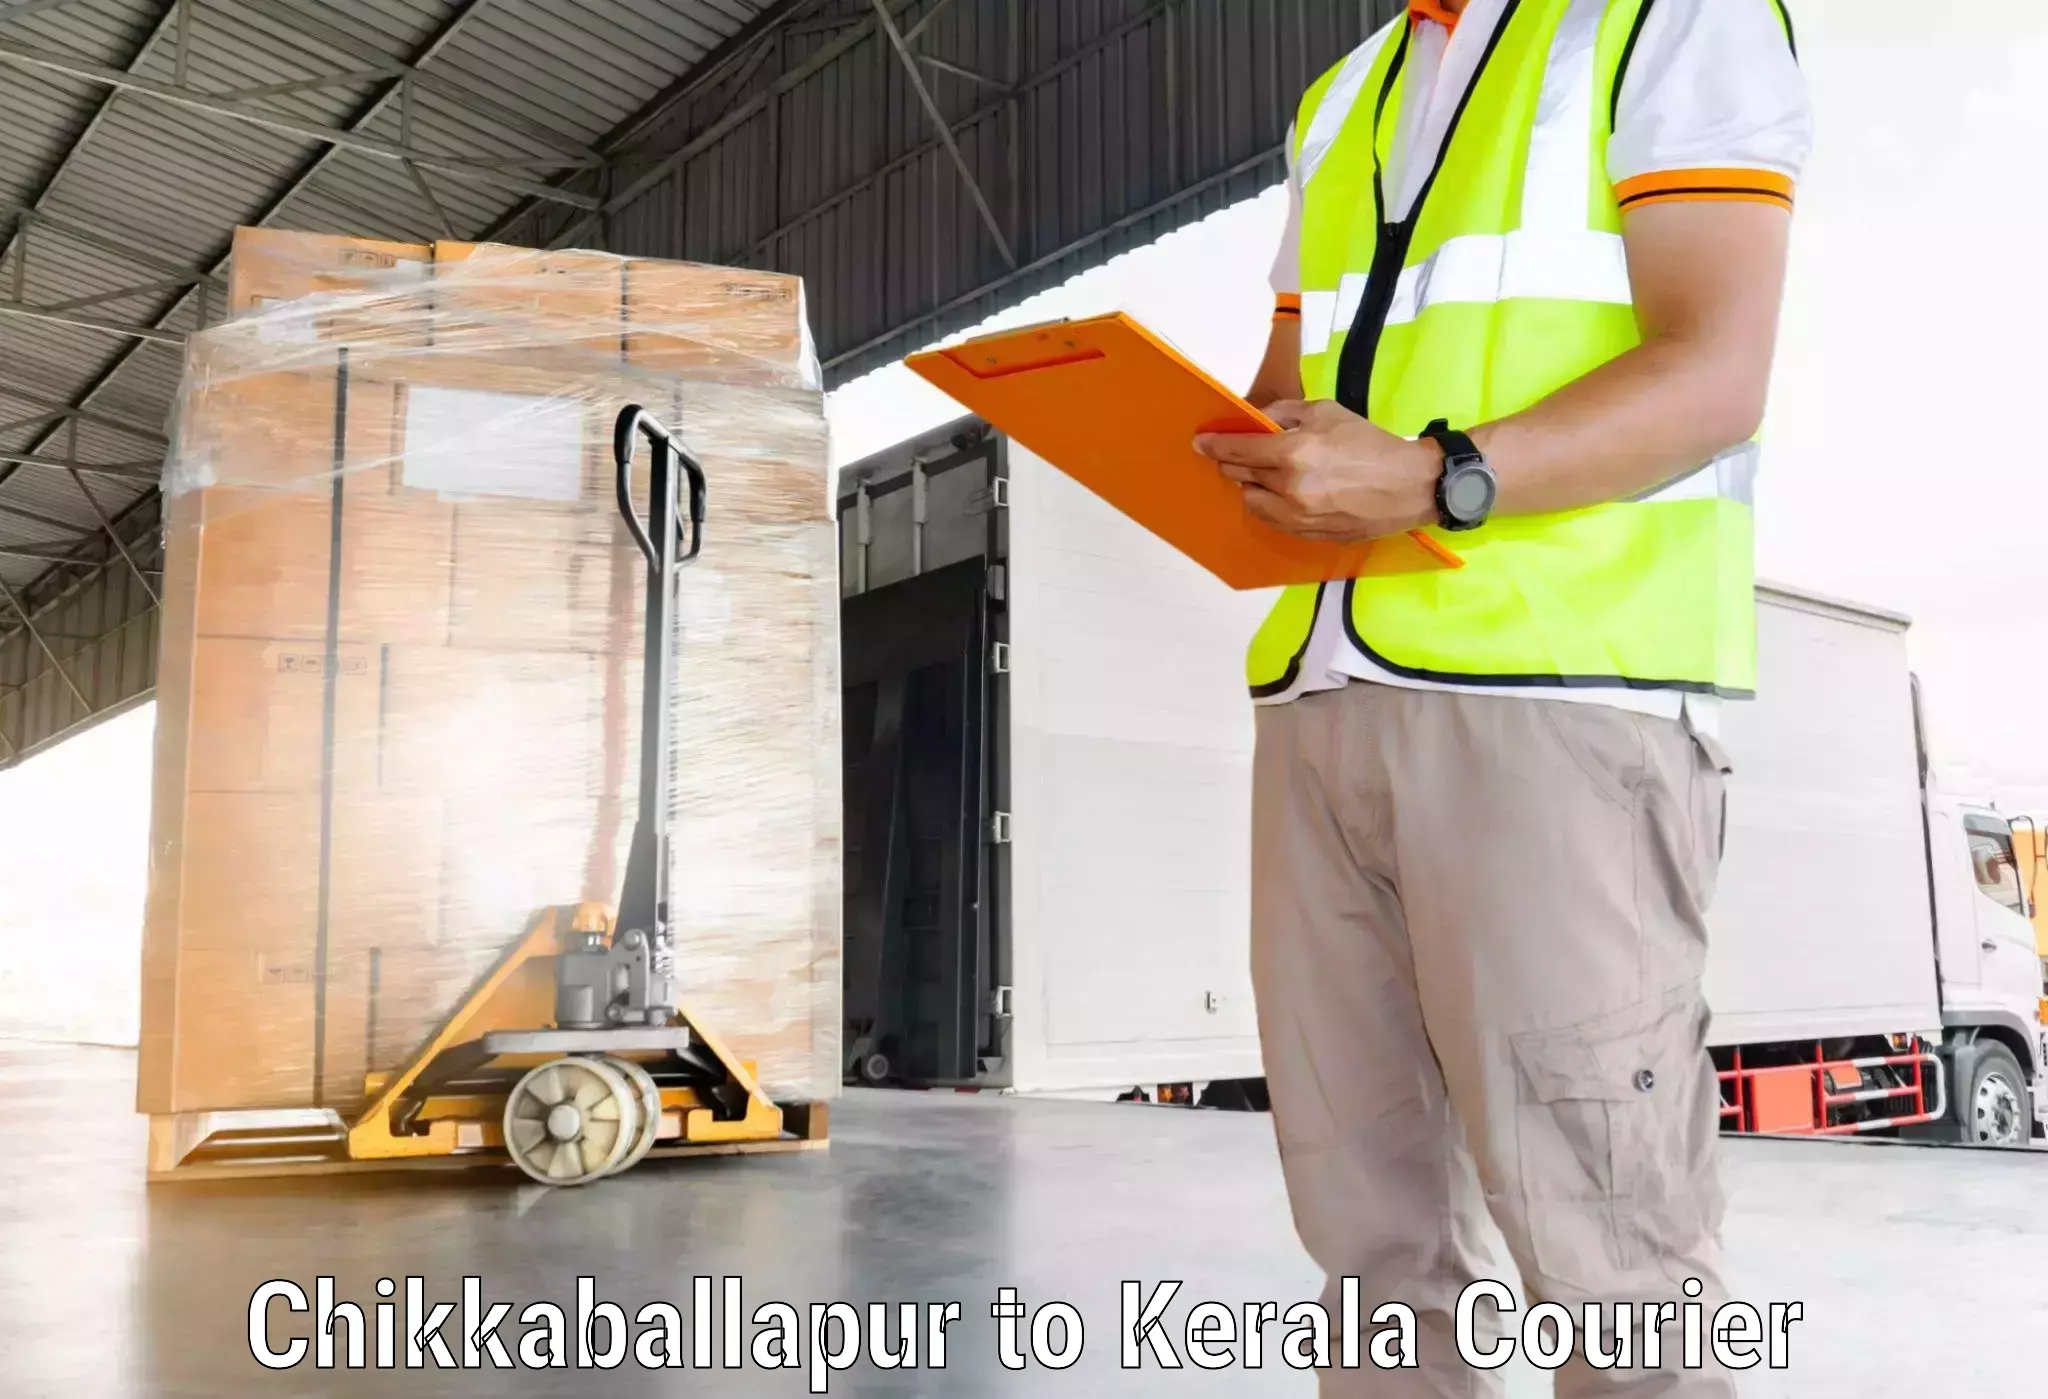 Courier service comparison Chikkaballapur to Thalassery